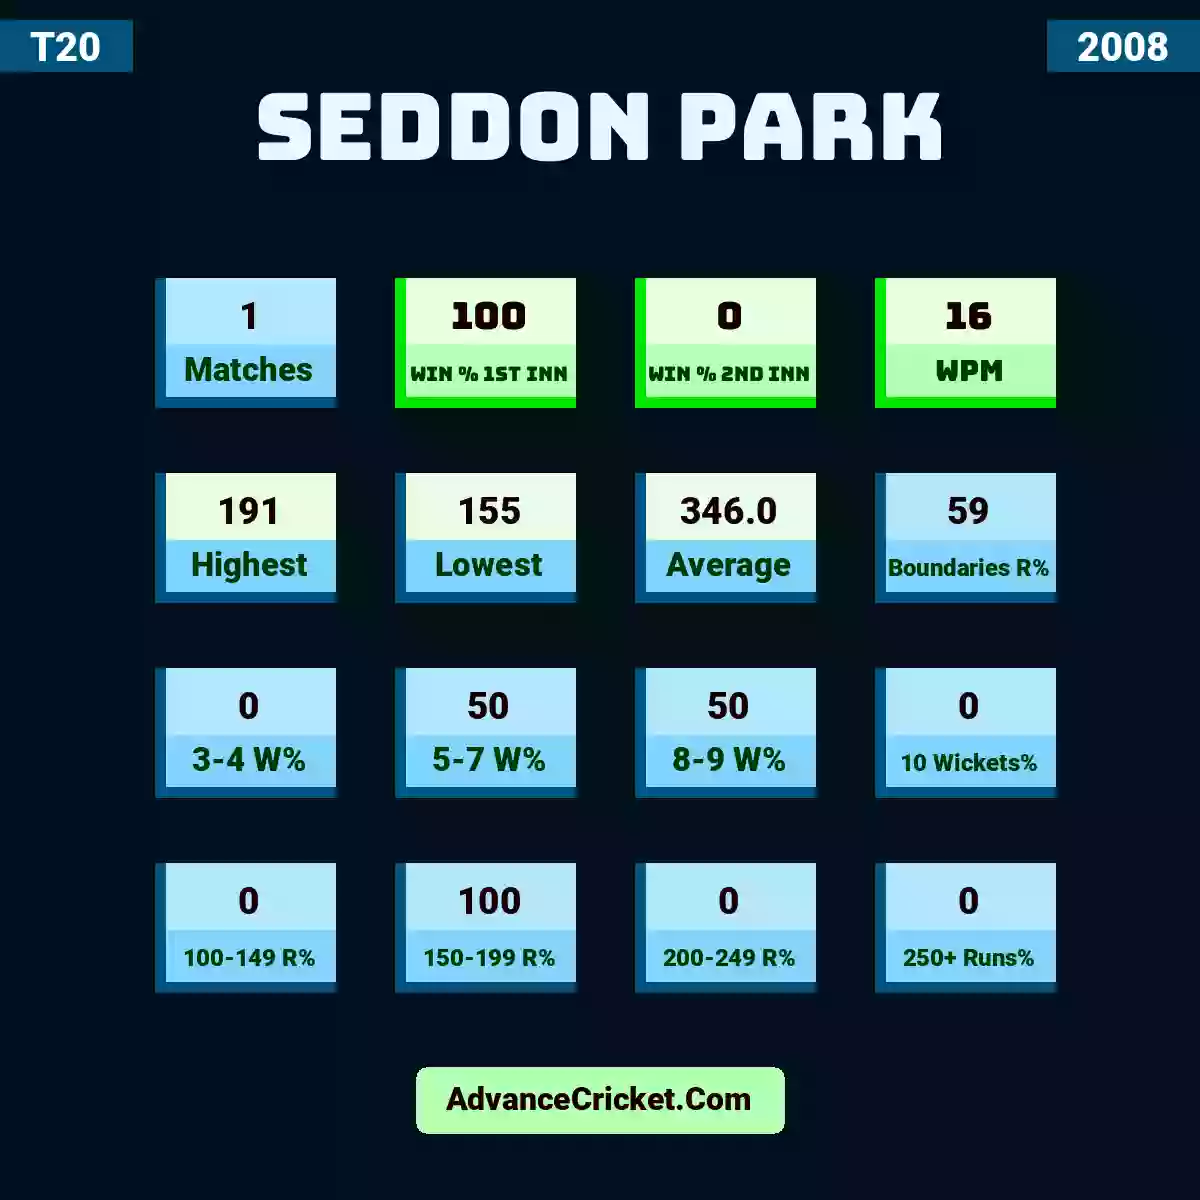 Image showing Seddon Park with Matches: 1, Win % 1st Inn: 100, Win % 2nd Inn: 0, WPM: 16, Highest: 191, Lowest: 155, Average: 346.0, Boundaries R%: 59, 3-4 W%: 0, 5-7 W%: 50, 8-9 W%: 50, 10 Wickets%: 0, 100-149 R%: 0, 150-199 R%: 100, 200-249 R%: 0, 250+ Runs%: 0.